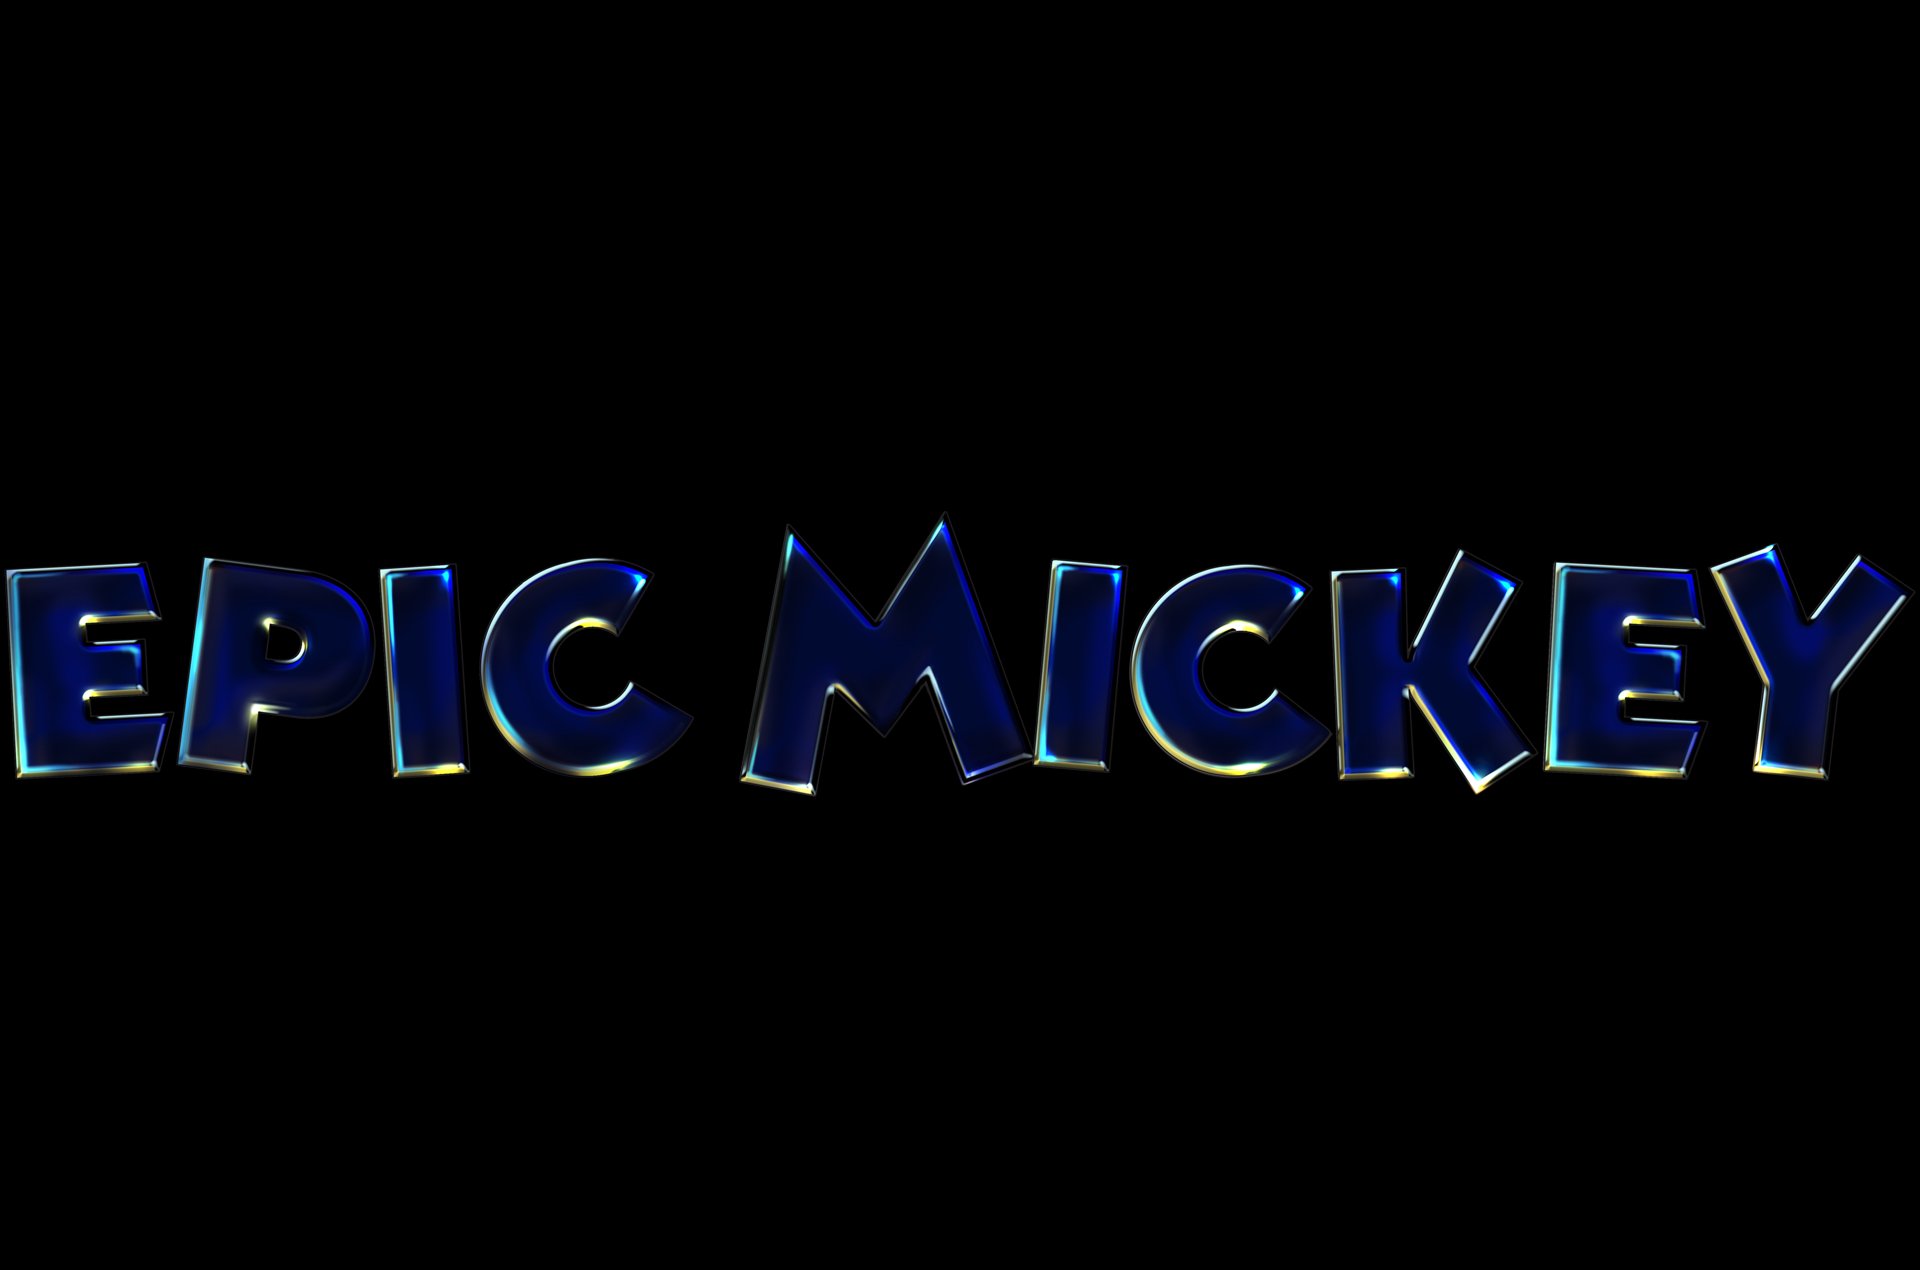 epic, Mickey, Disney, Platform, Family, Adventure, Puzzle, 1epicm, Animation, Poster Wallpaper